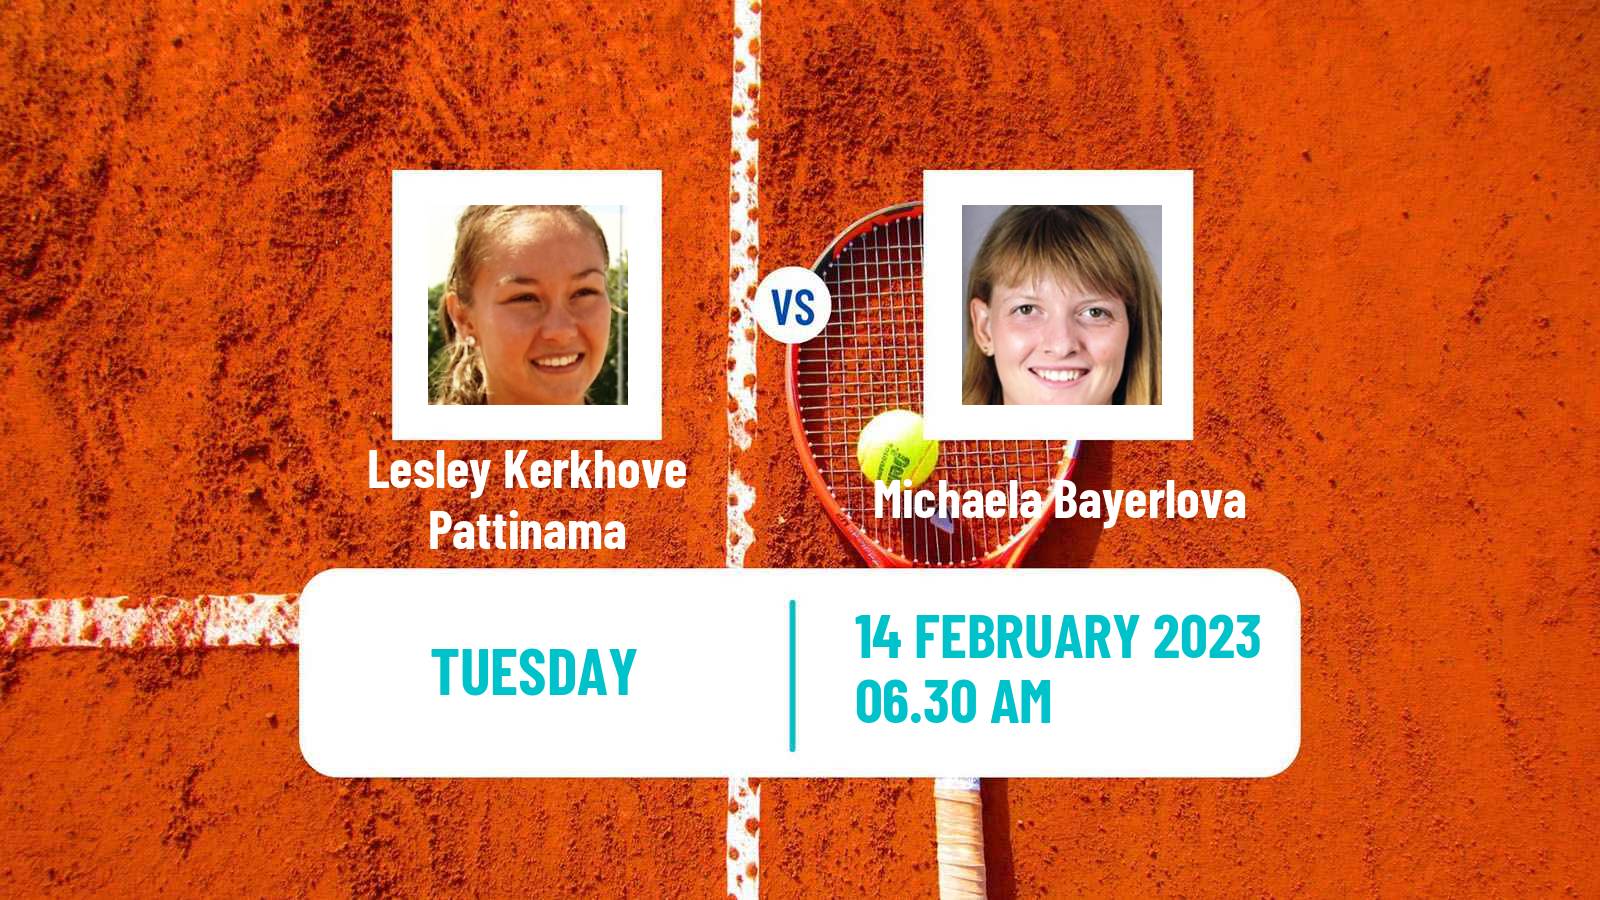 Tennis ITF Tournaments Lesley Kerkhove Pattinama - Michaela Bayerlova